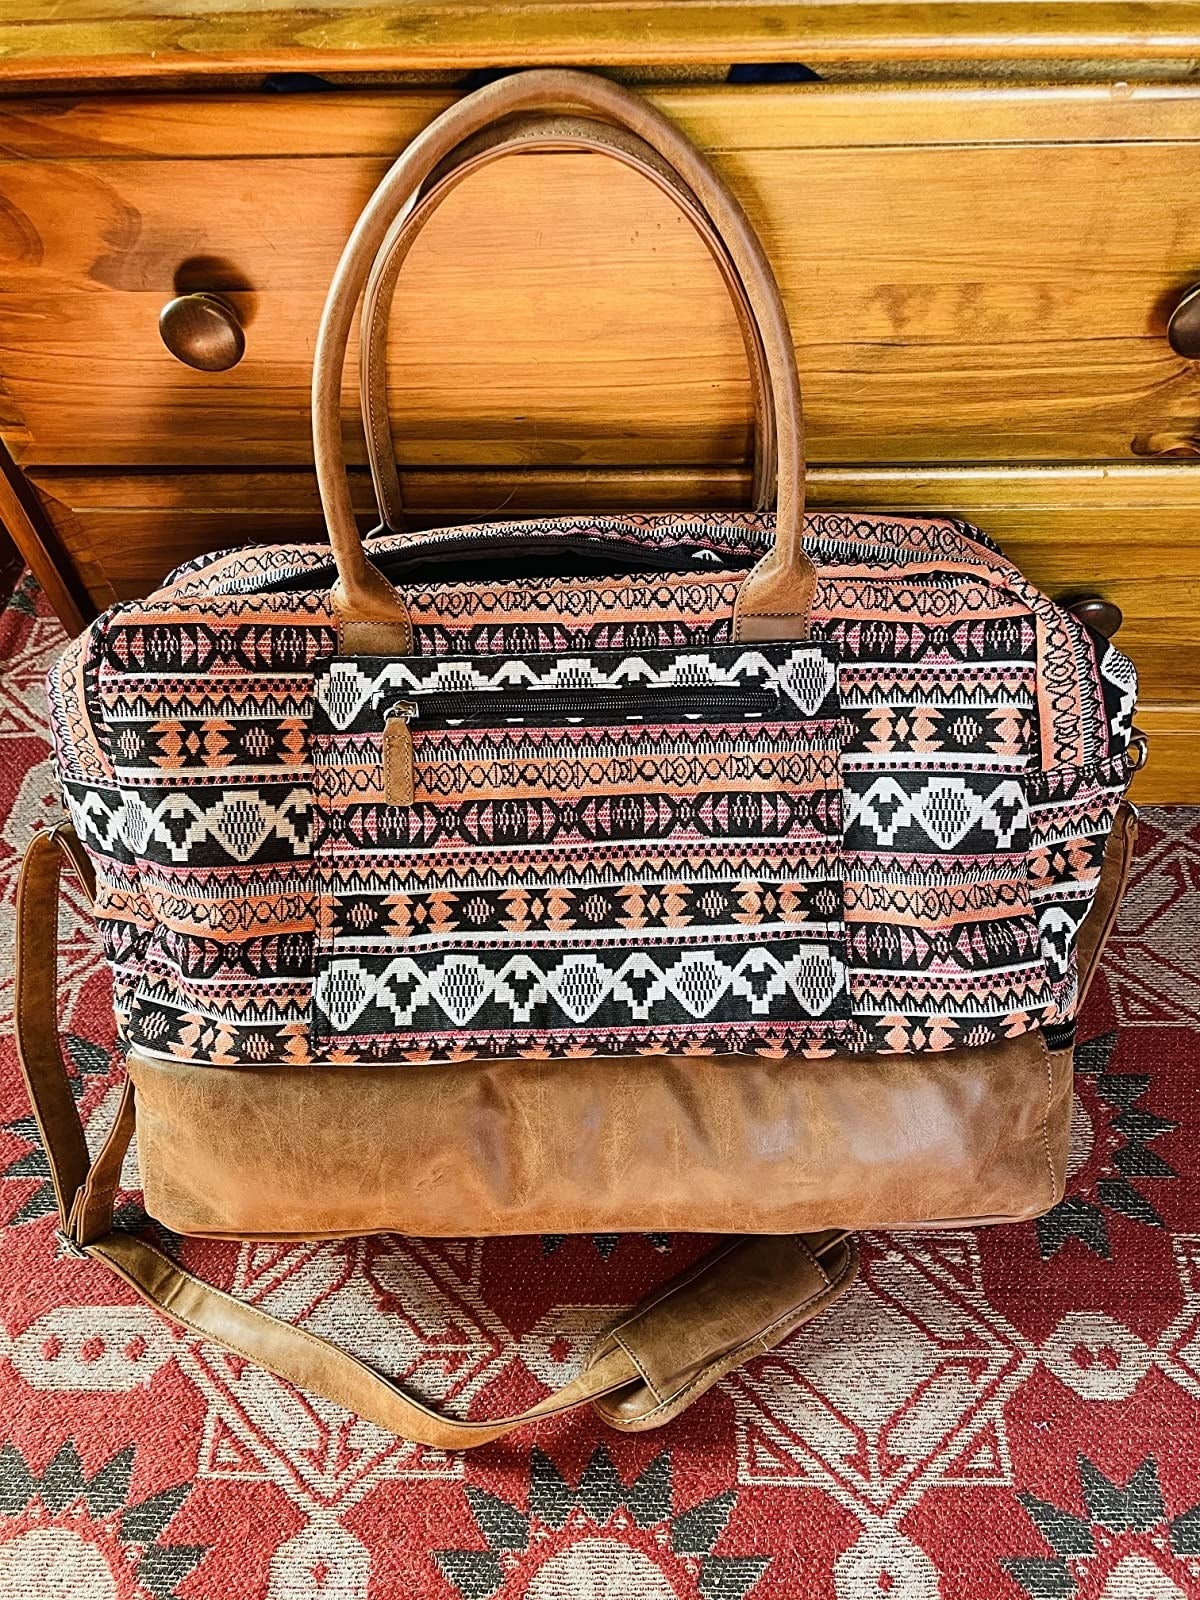 Travel Bag - Colorful Boho Weekender Bag